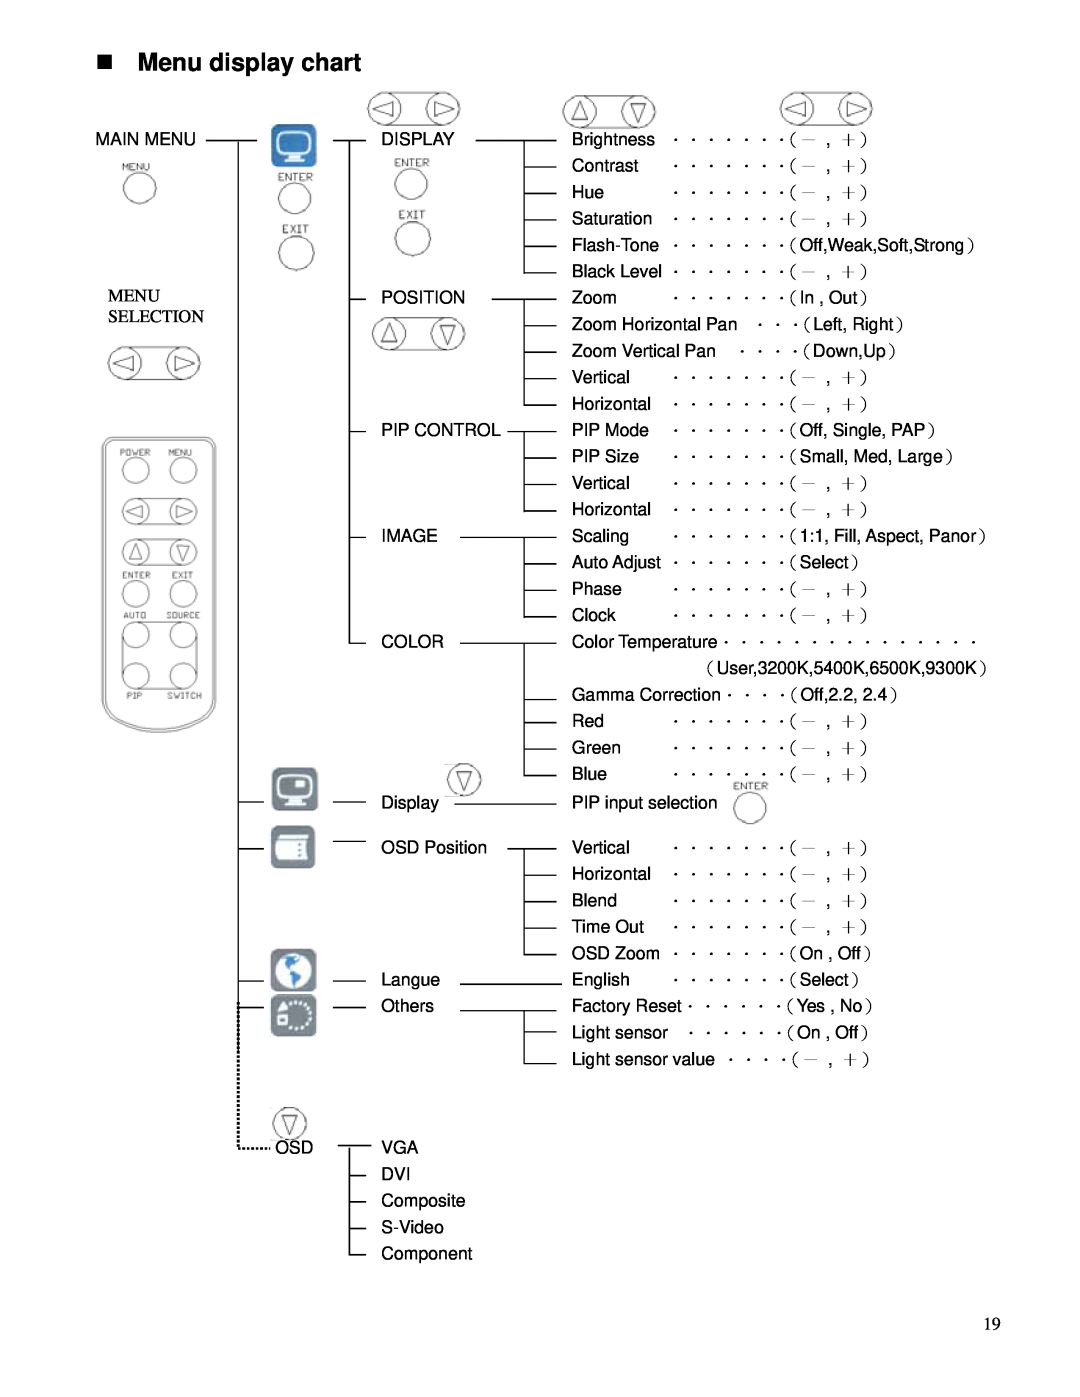 Toshiba P42LHA owner manual Menu display chart, Menu Selection 